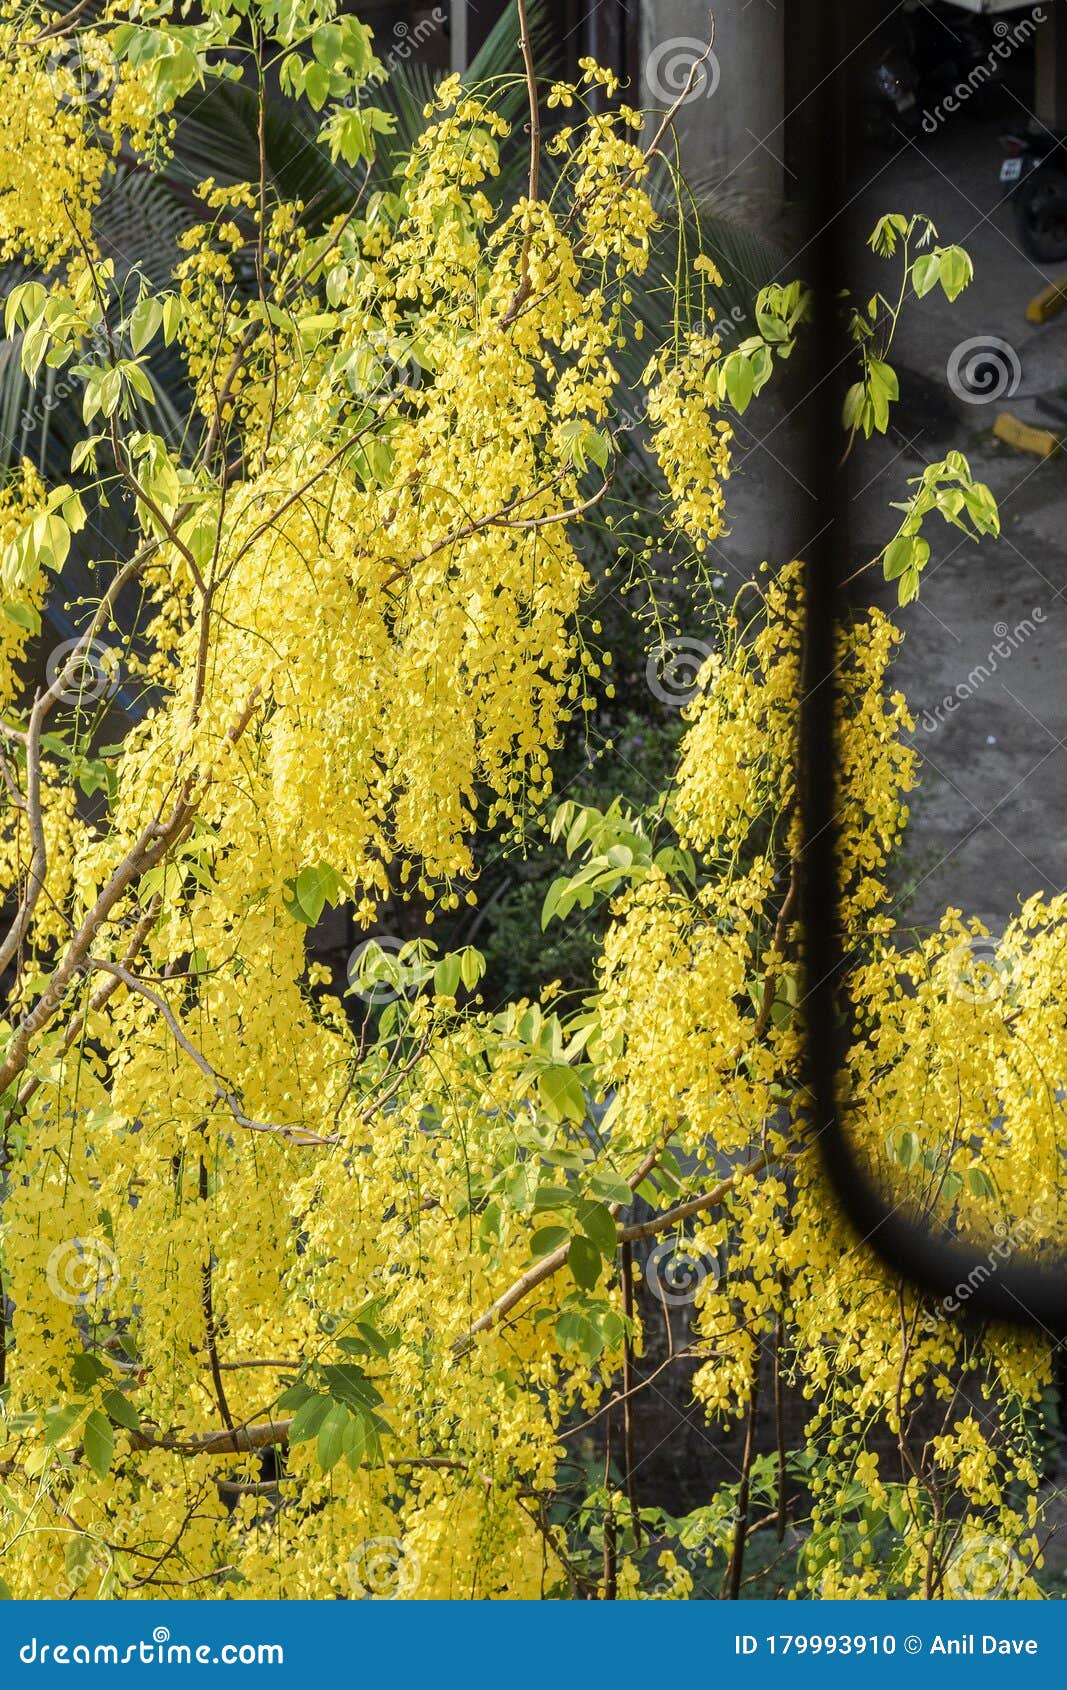 assia fistula; golden rain tree; canafistula with fruit from my kitchen window grill as covid 19 lockdown kalyan 